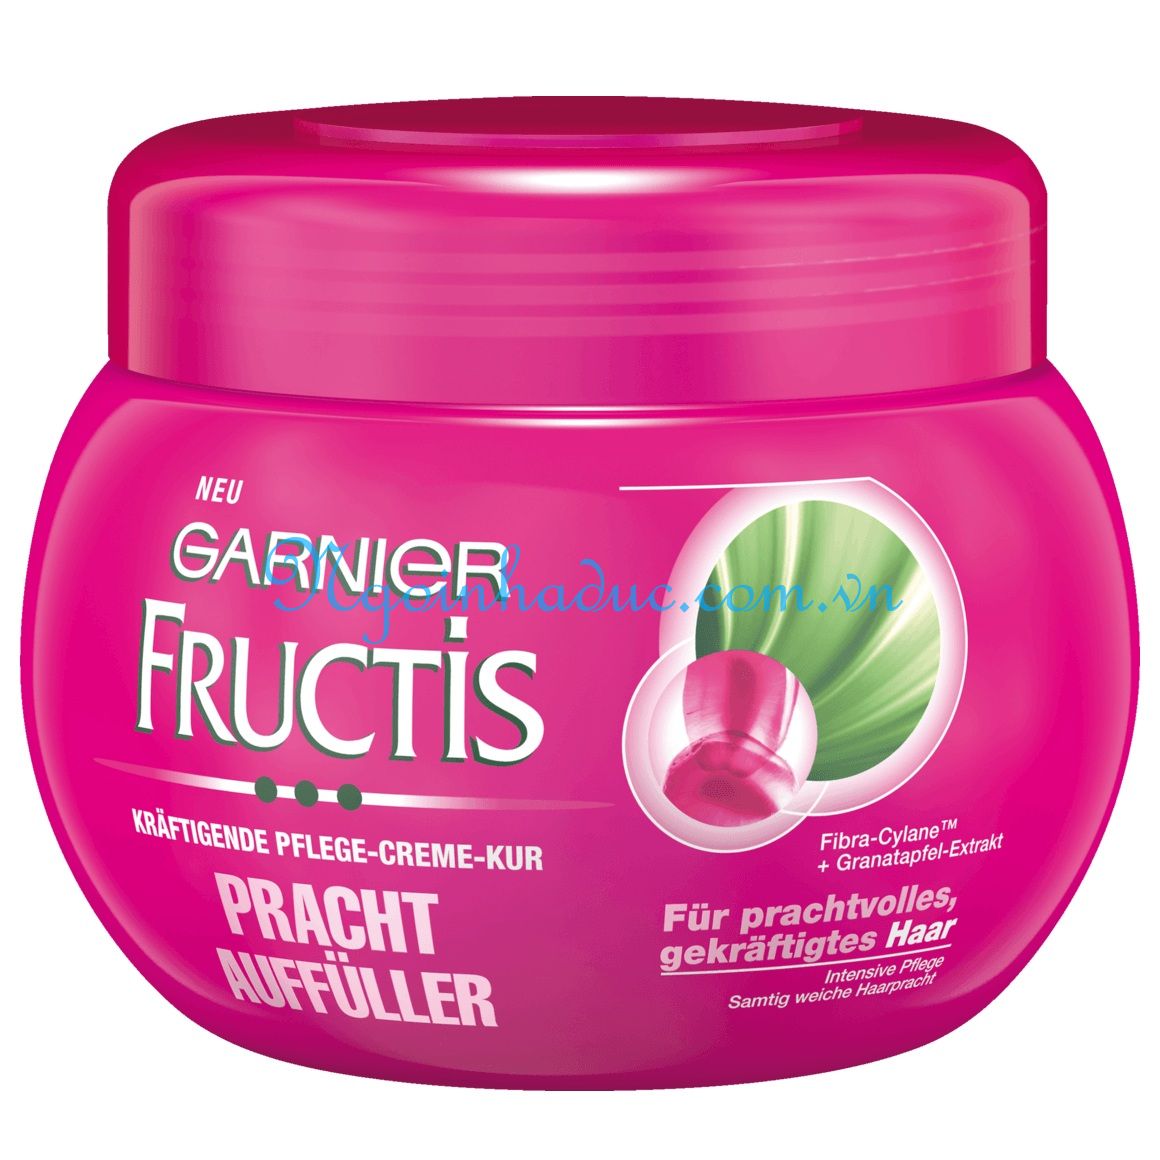 Dầu hấp Fructis 300ml (hồng)